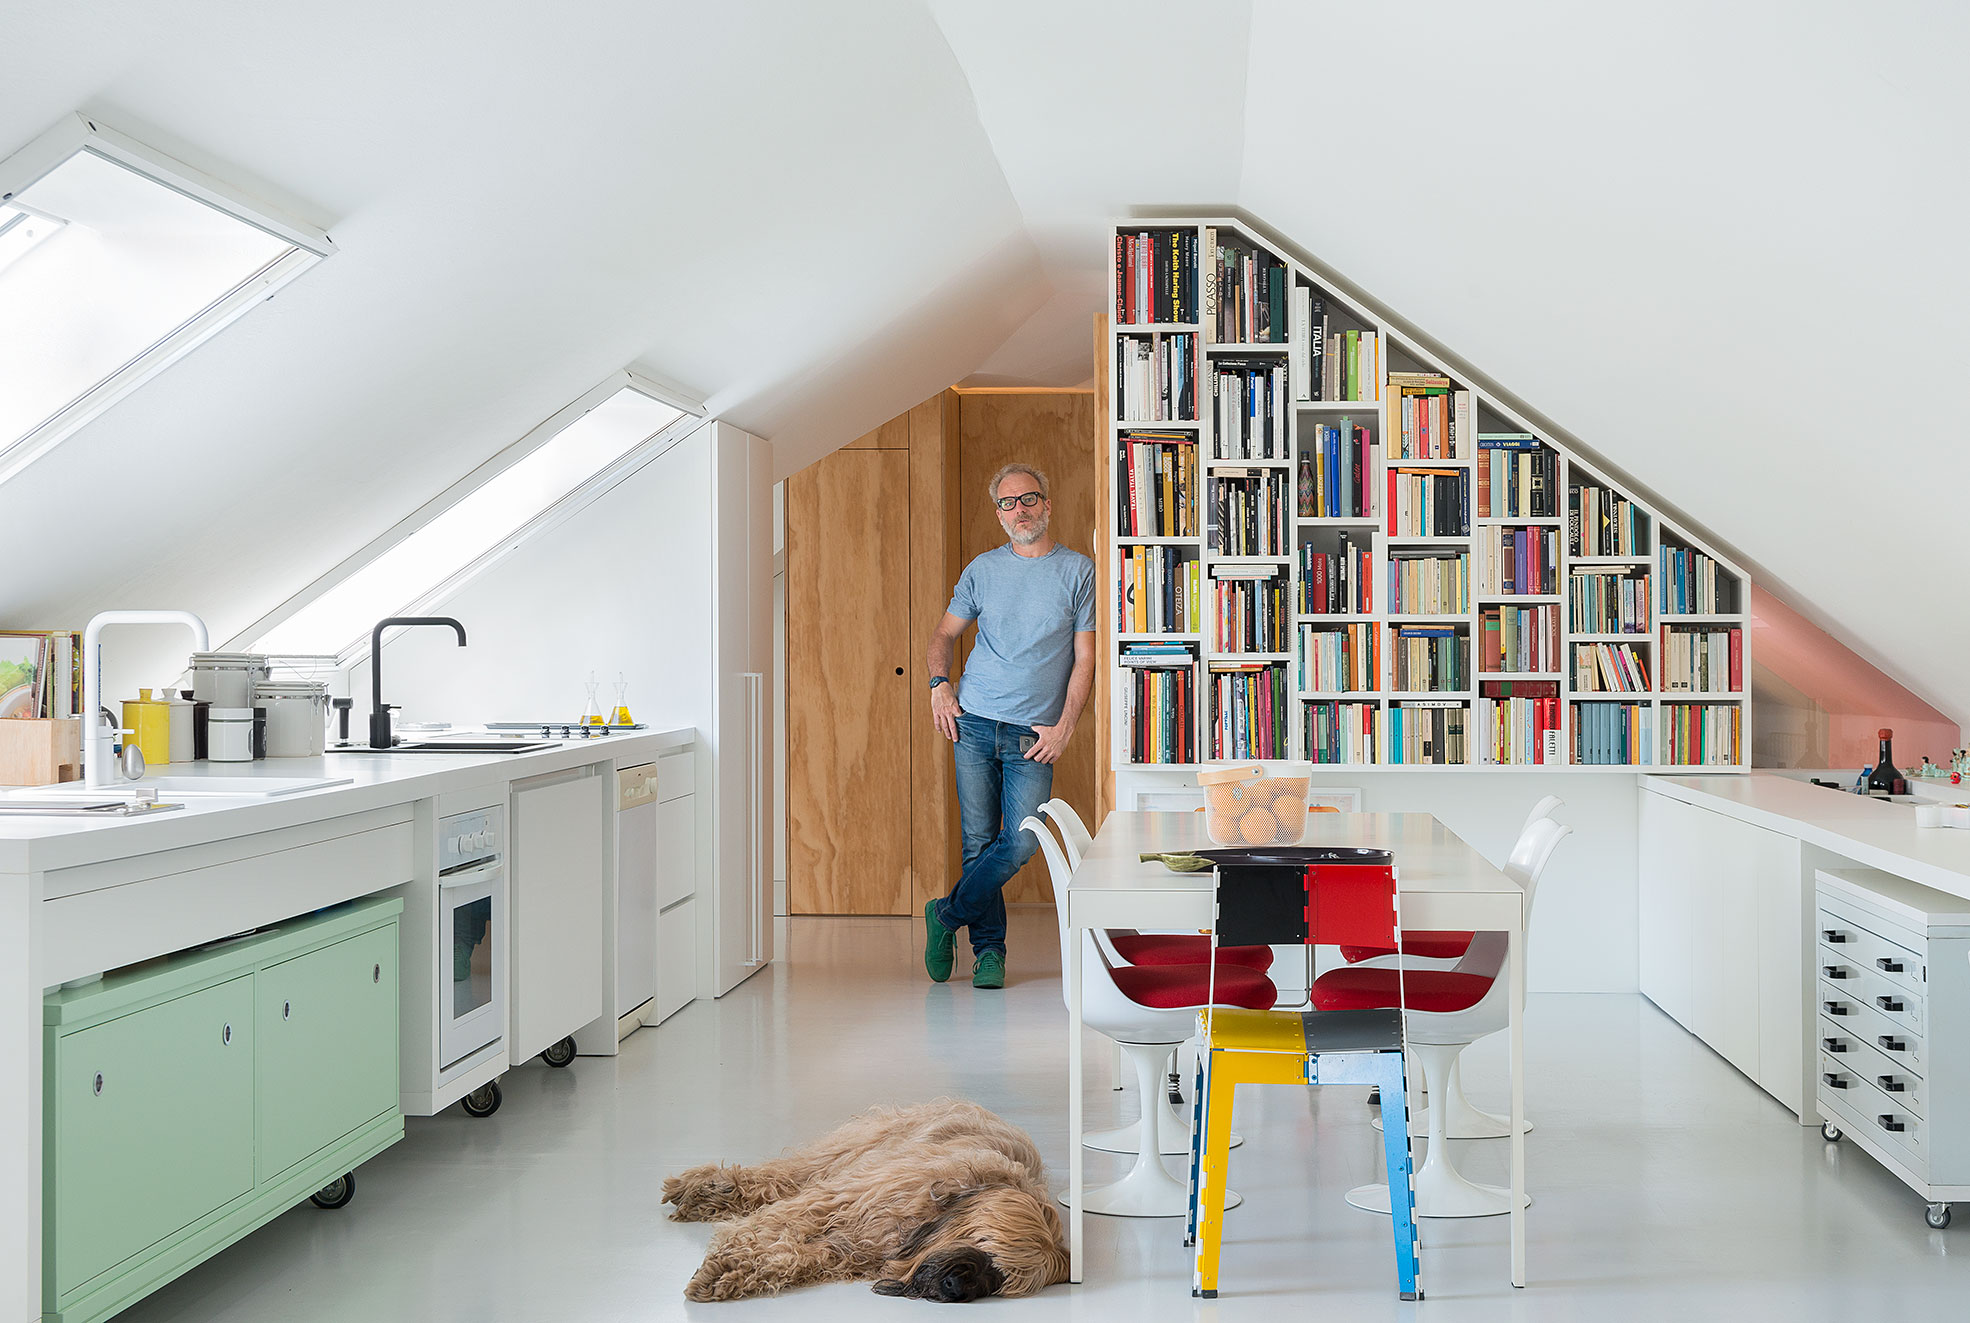 Alessio Riva Architect and his dog in his kitchen Photographer Maria Teresa Furnari